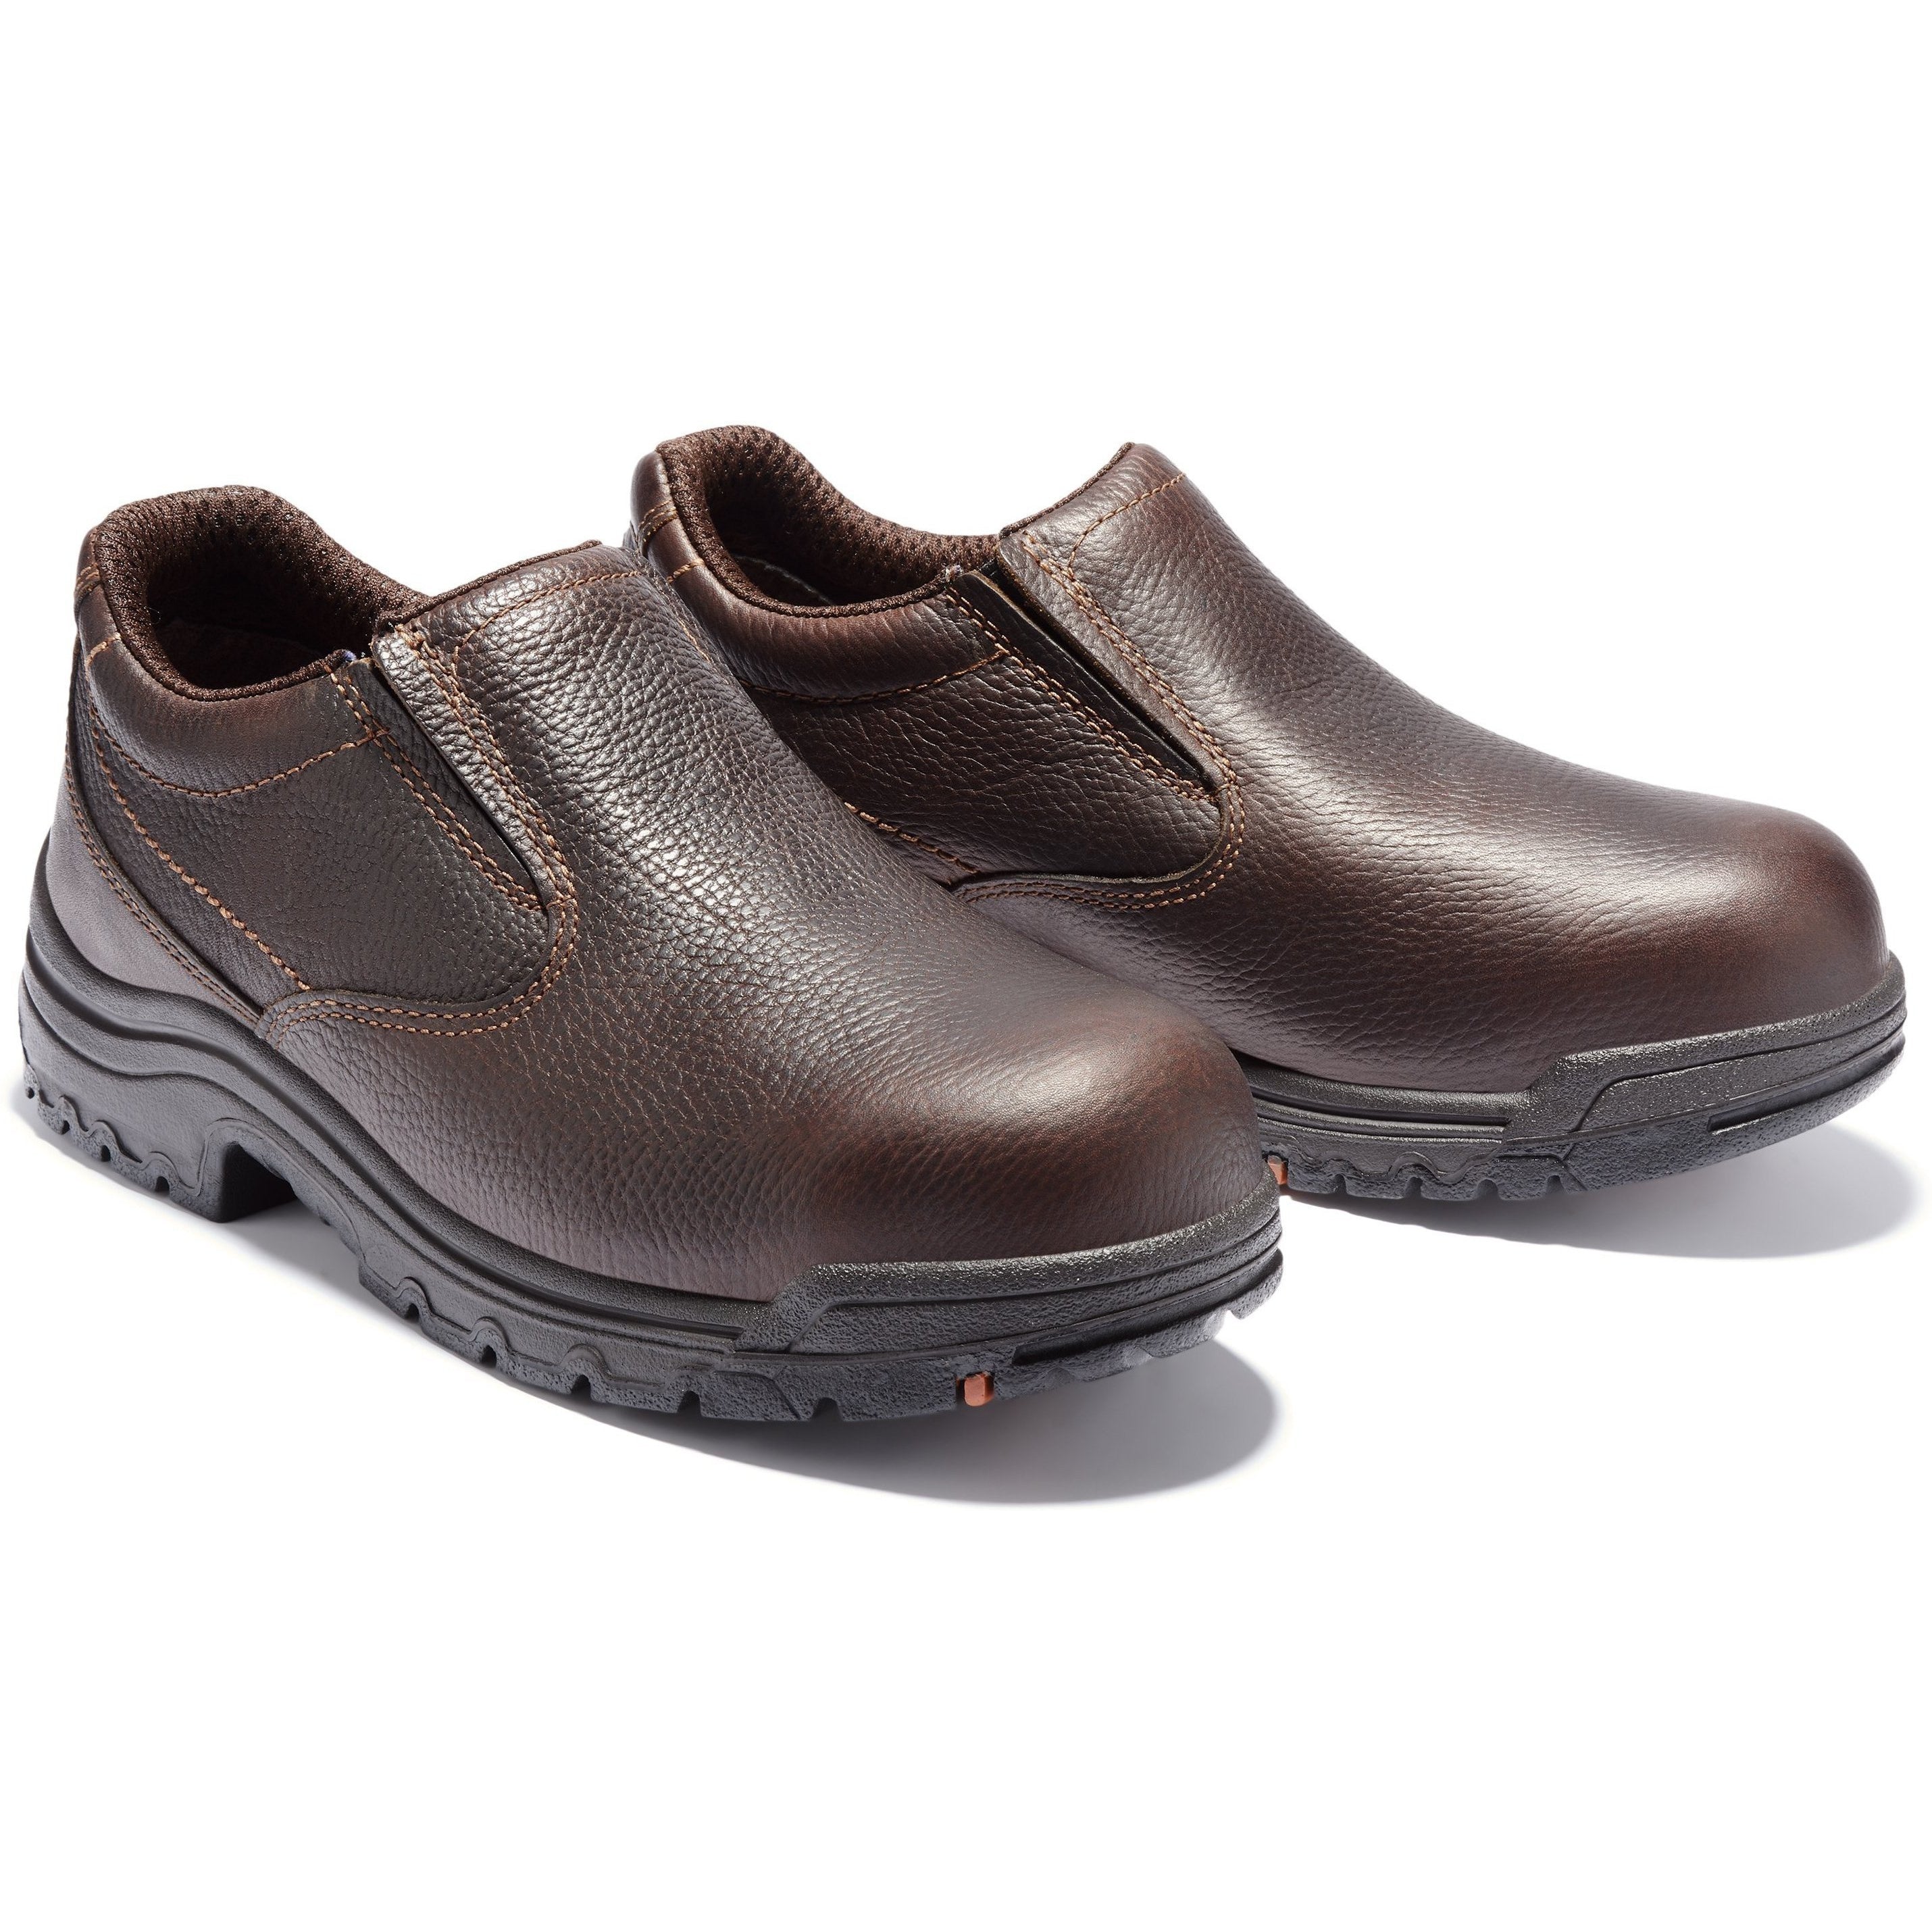 Timberland PRO Men's TiTAN Oxford Alloy Toe Work Shoe - TB053534230 7 / Medium / Brown - Overlook Boots